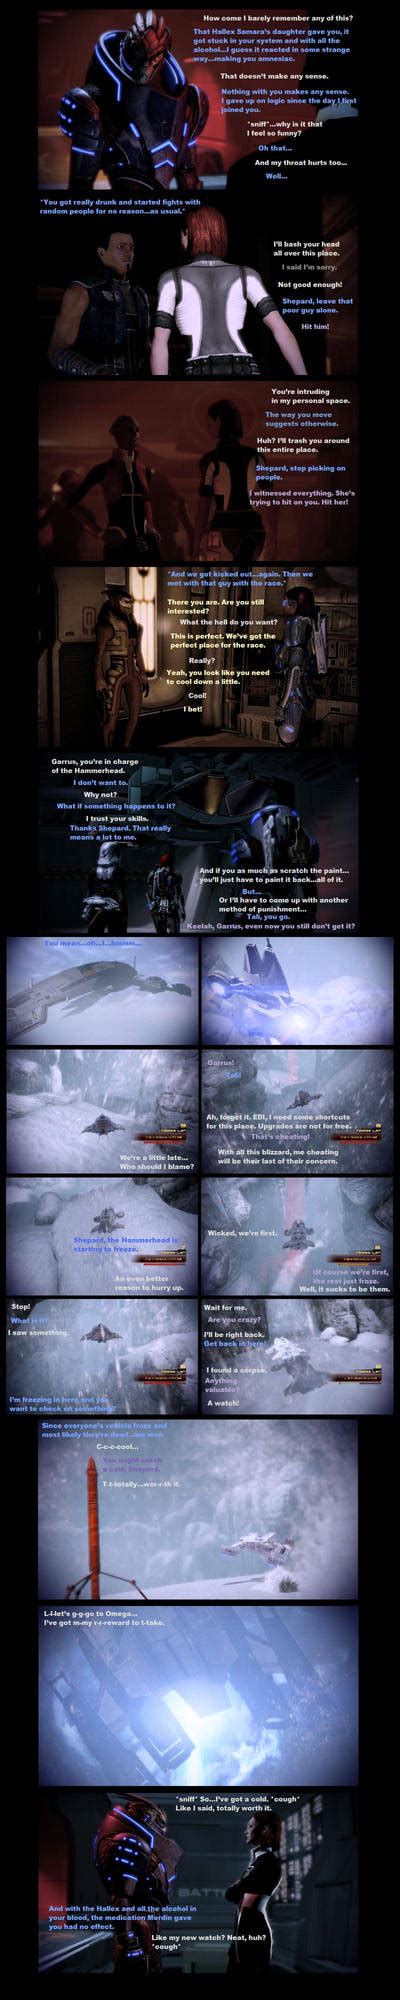 Mass Effect 2 Adventure P249 By Pomponorium On Deviantart